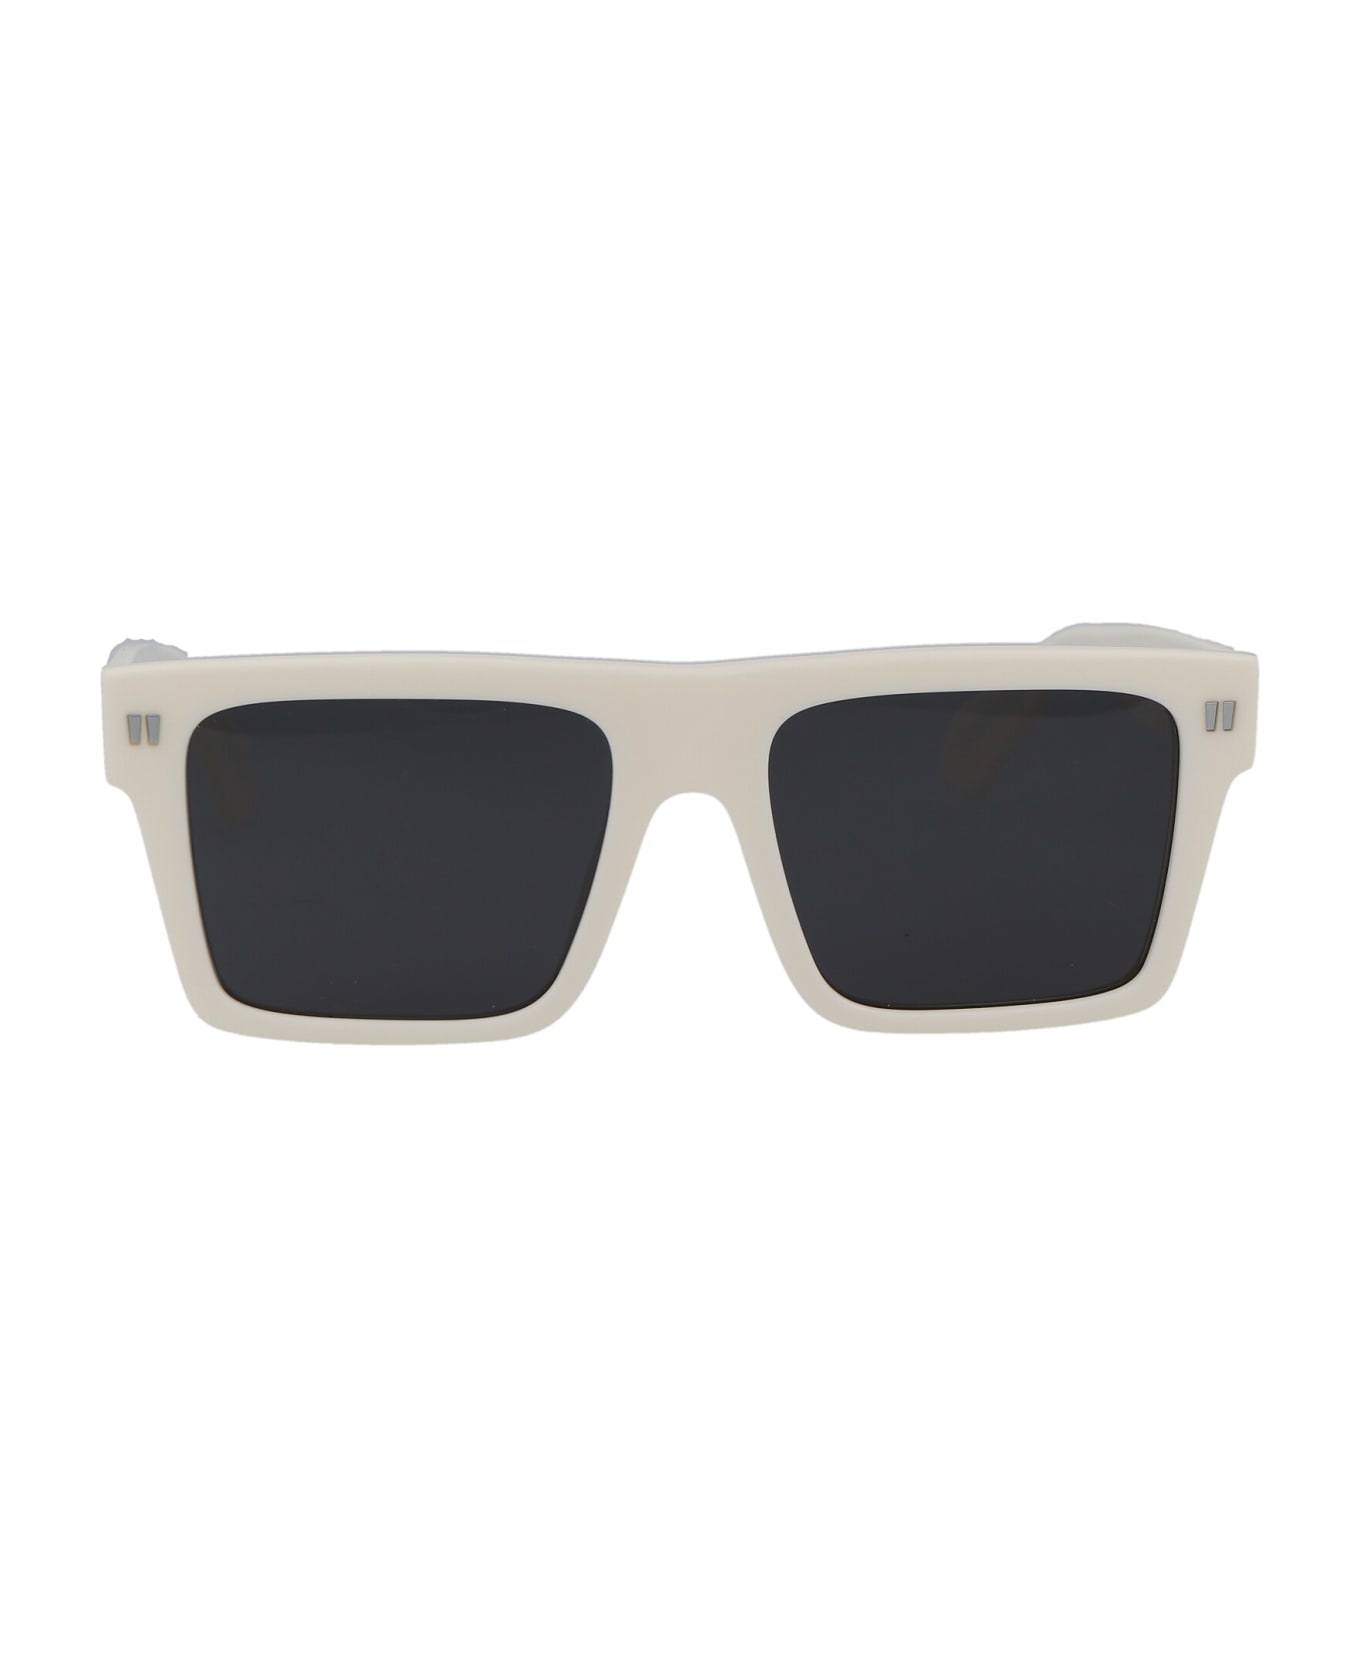 Off-White Lawton Sunglasses - 0107 WHITE